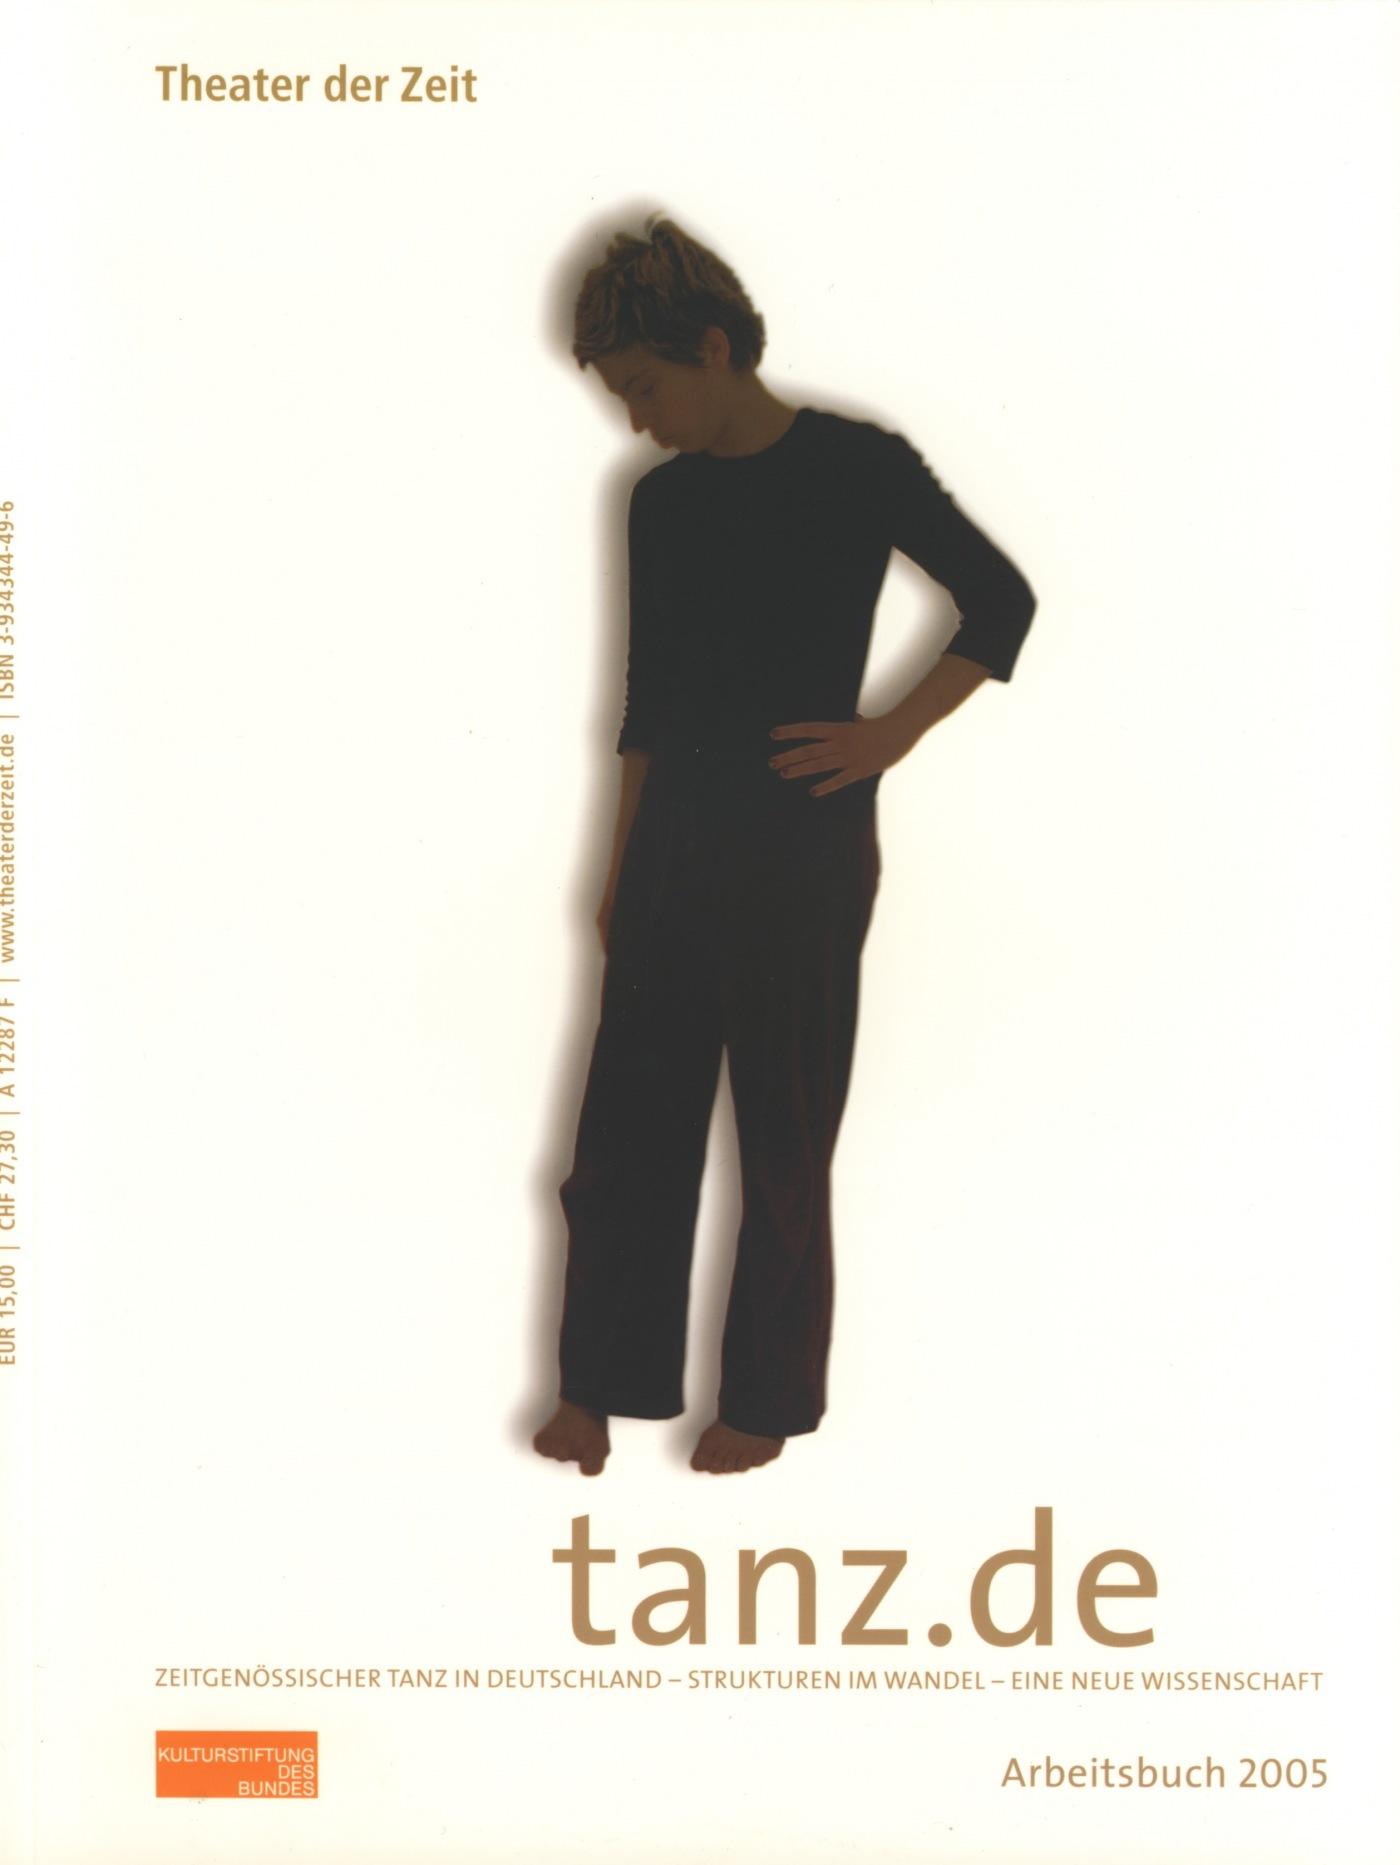 Arbeitsbuch 14 "tanz.de"